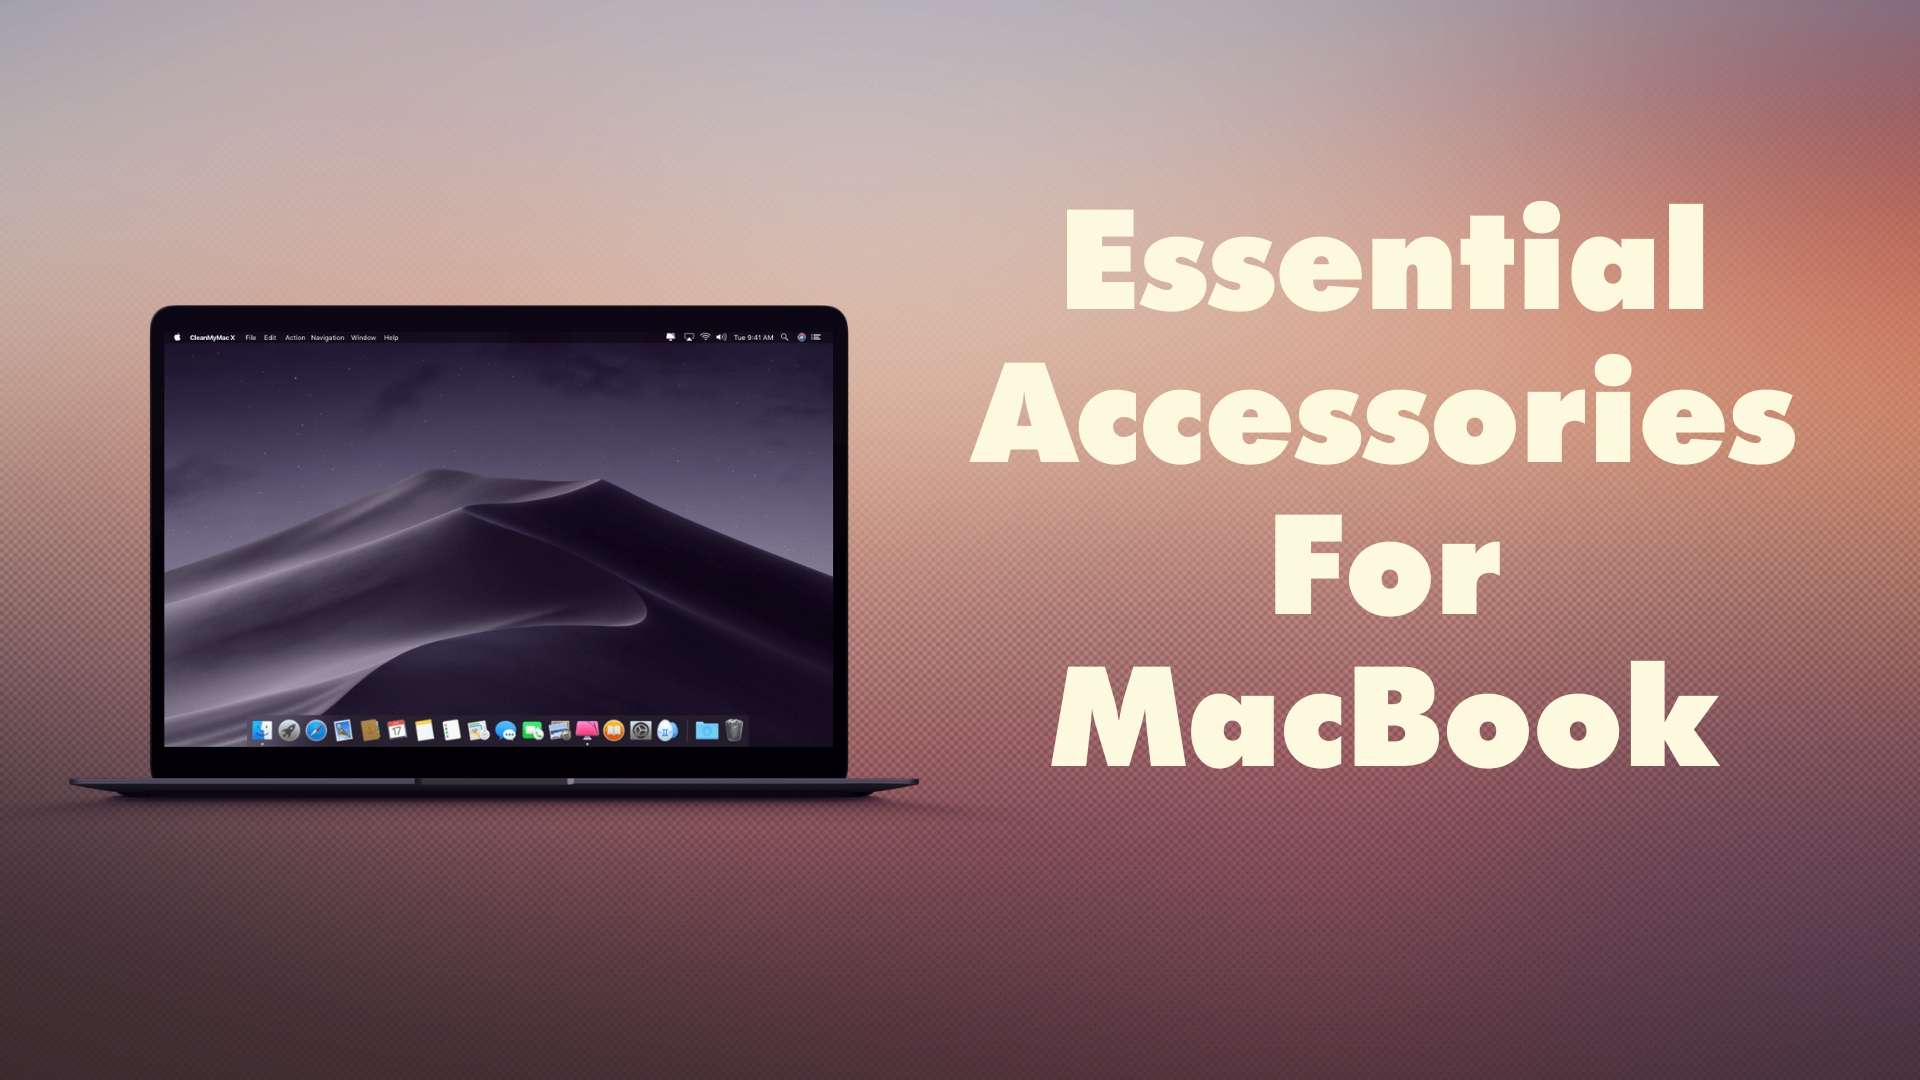 Accessories For MacBook